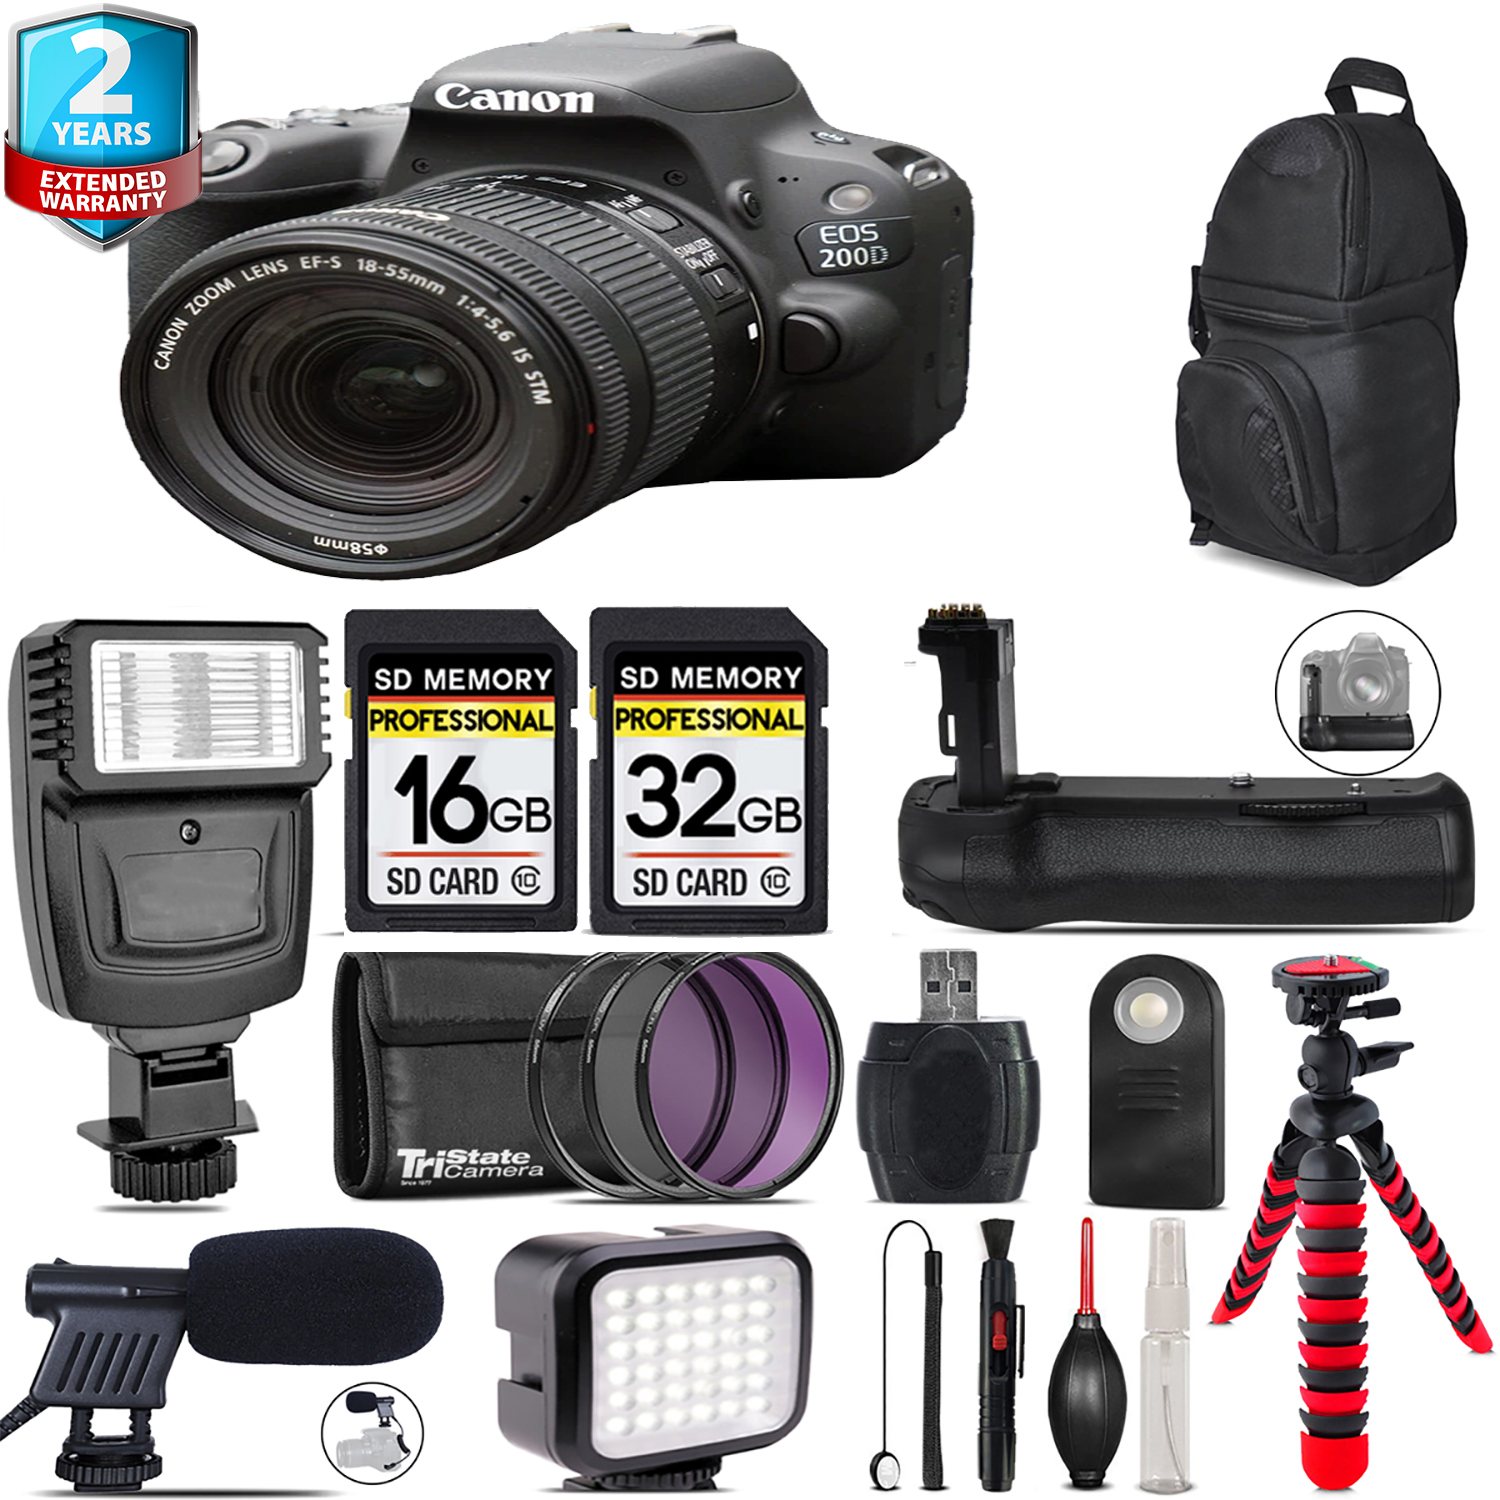 EOS Rebel 200D Camera (Black) + 18-55mm IS STM + LED Kit + Mic + 48GB *FREE SHIPPING*